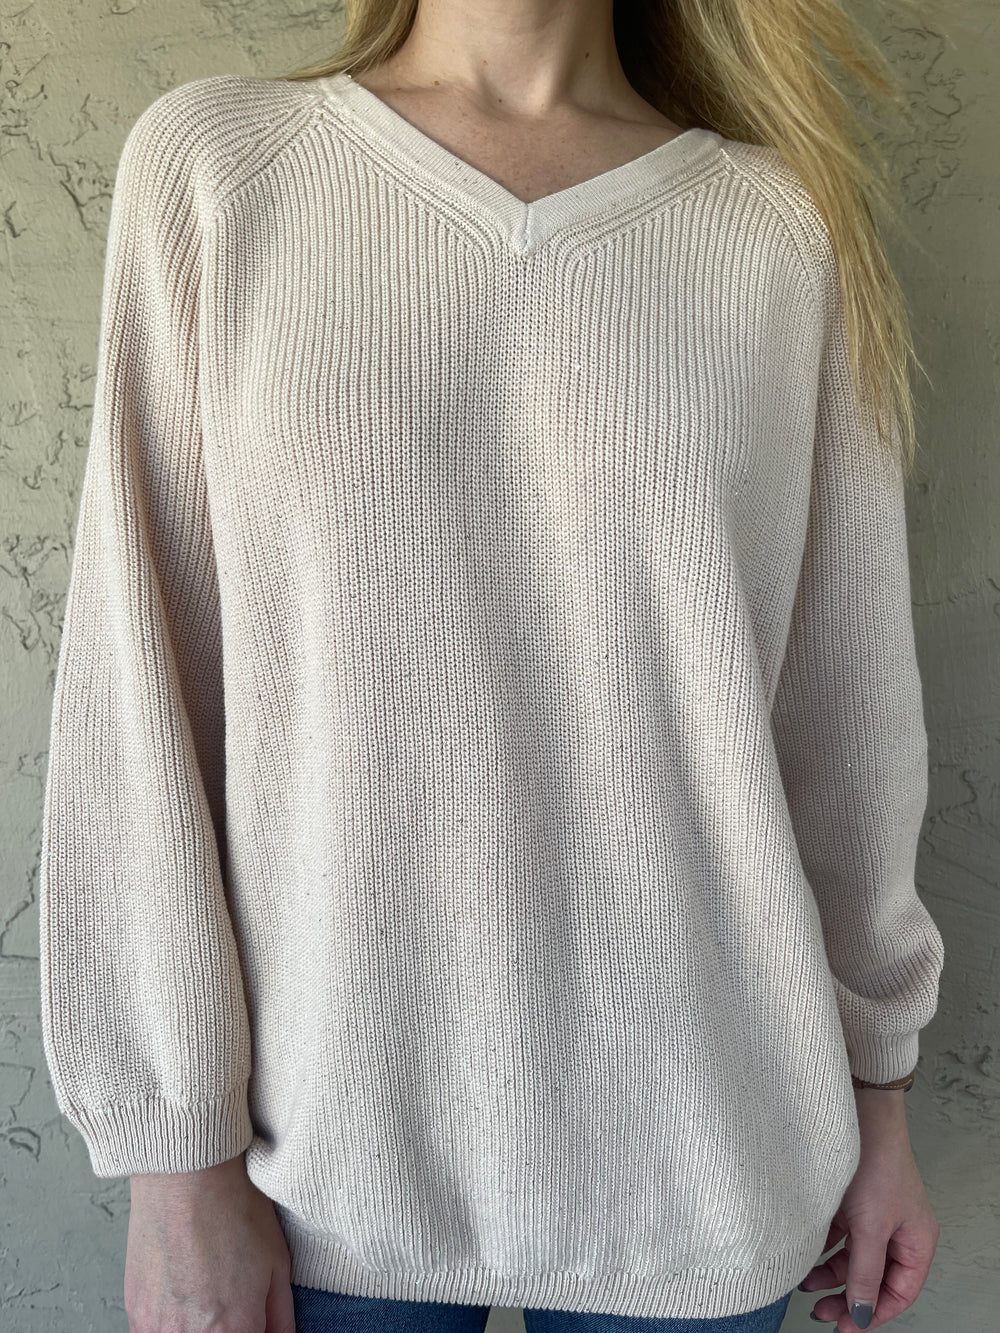 Edinburg Knitwear Pima Sequin Sweater in Off White 